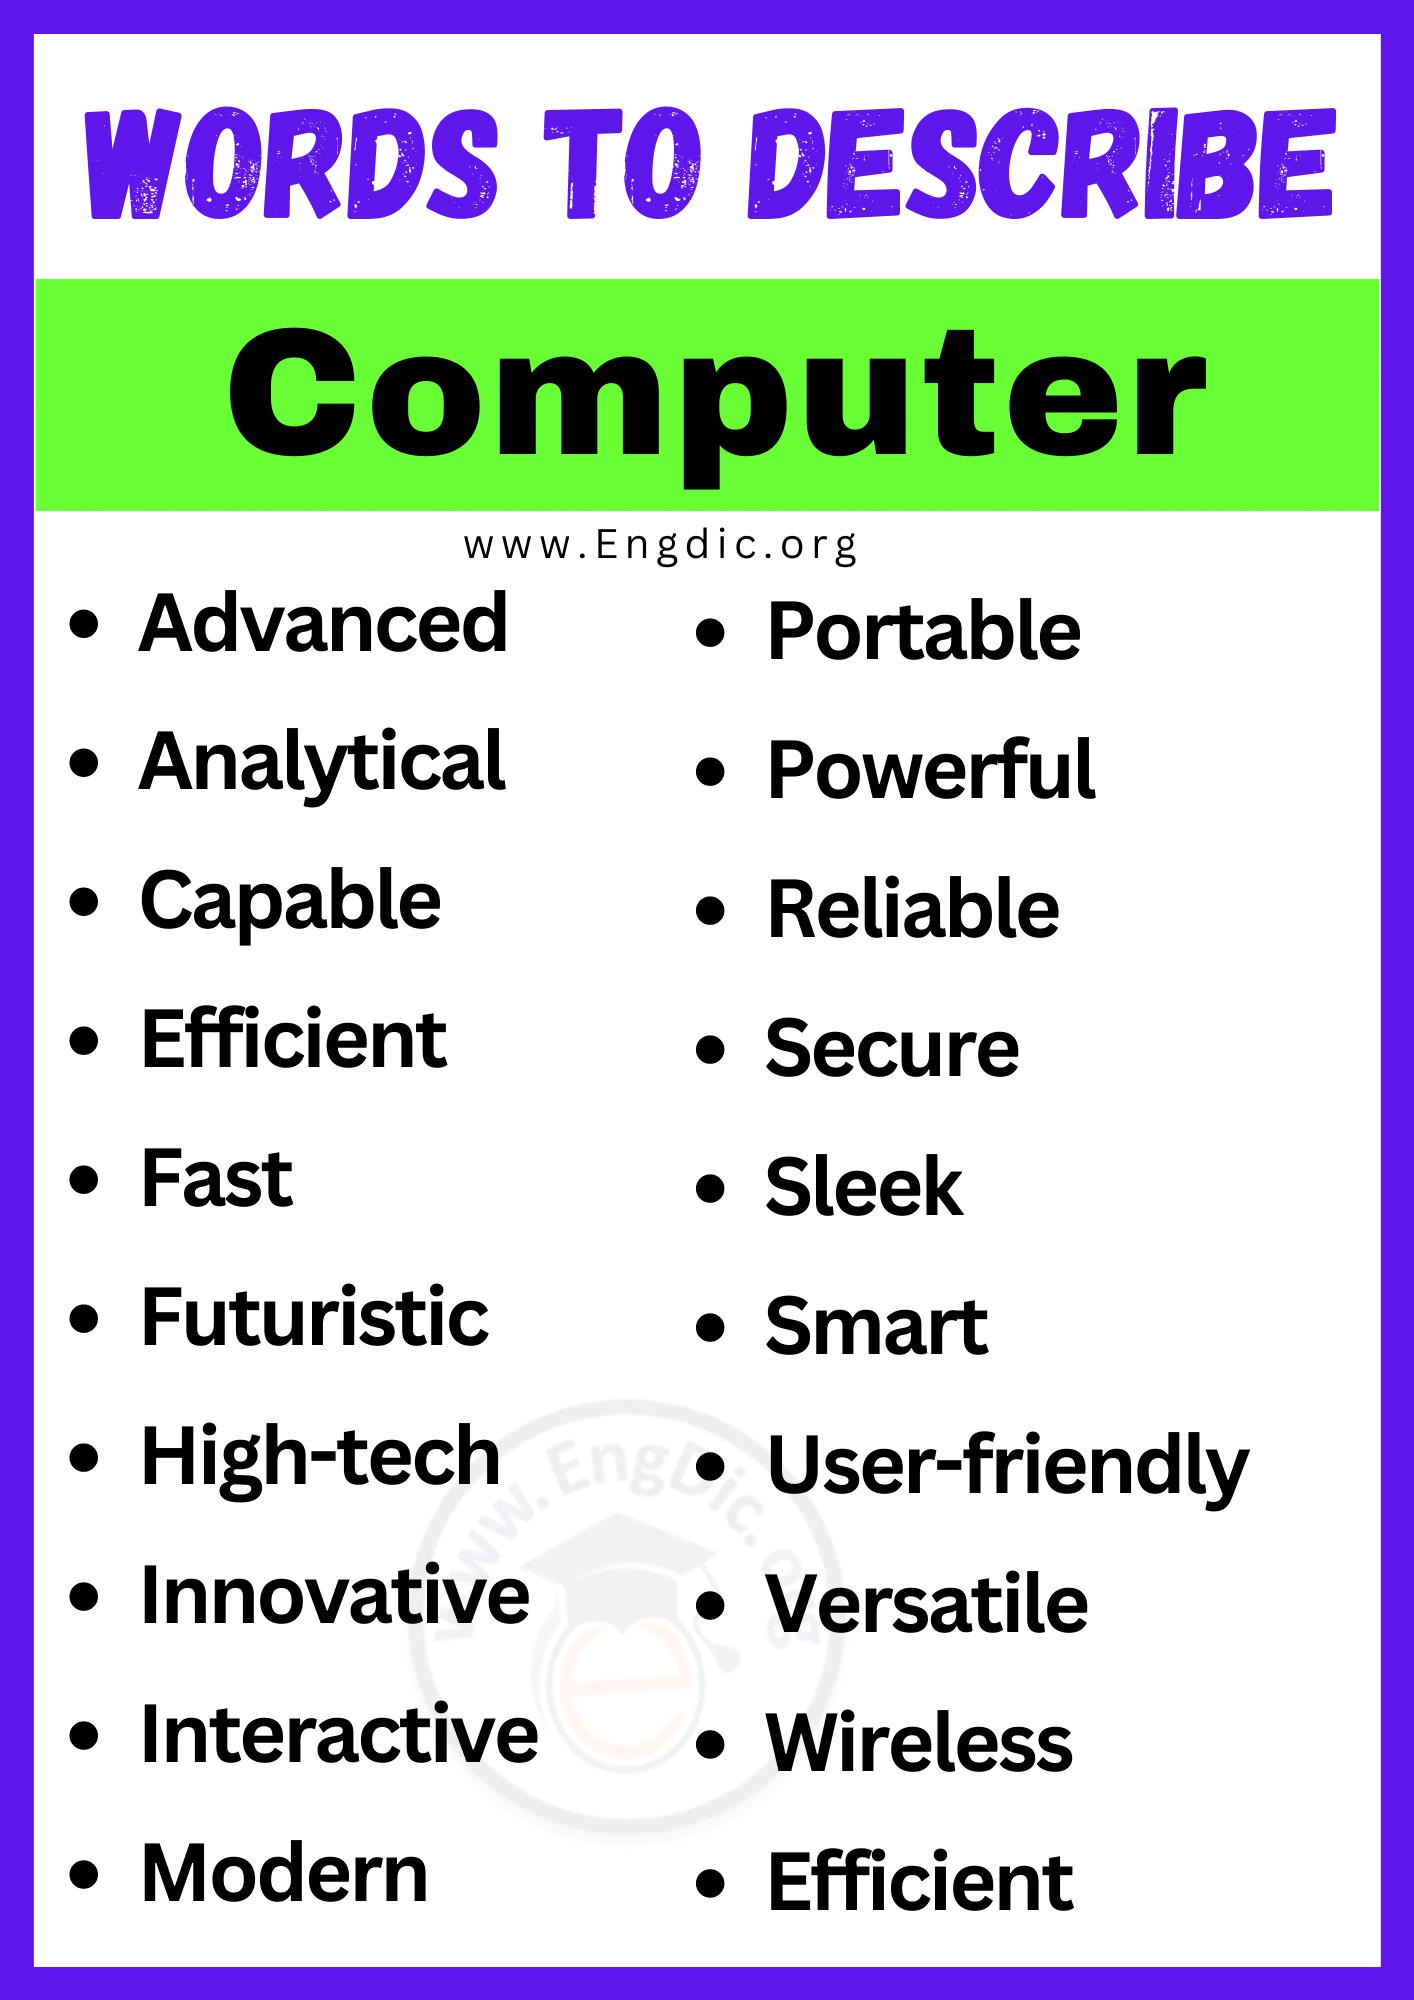 Words to Describe Computer